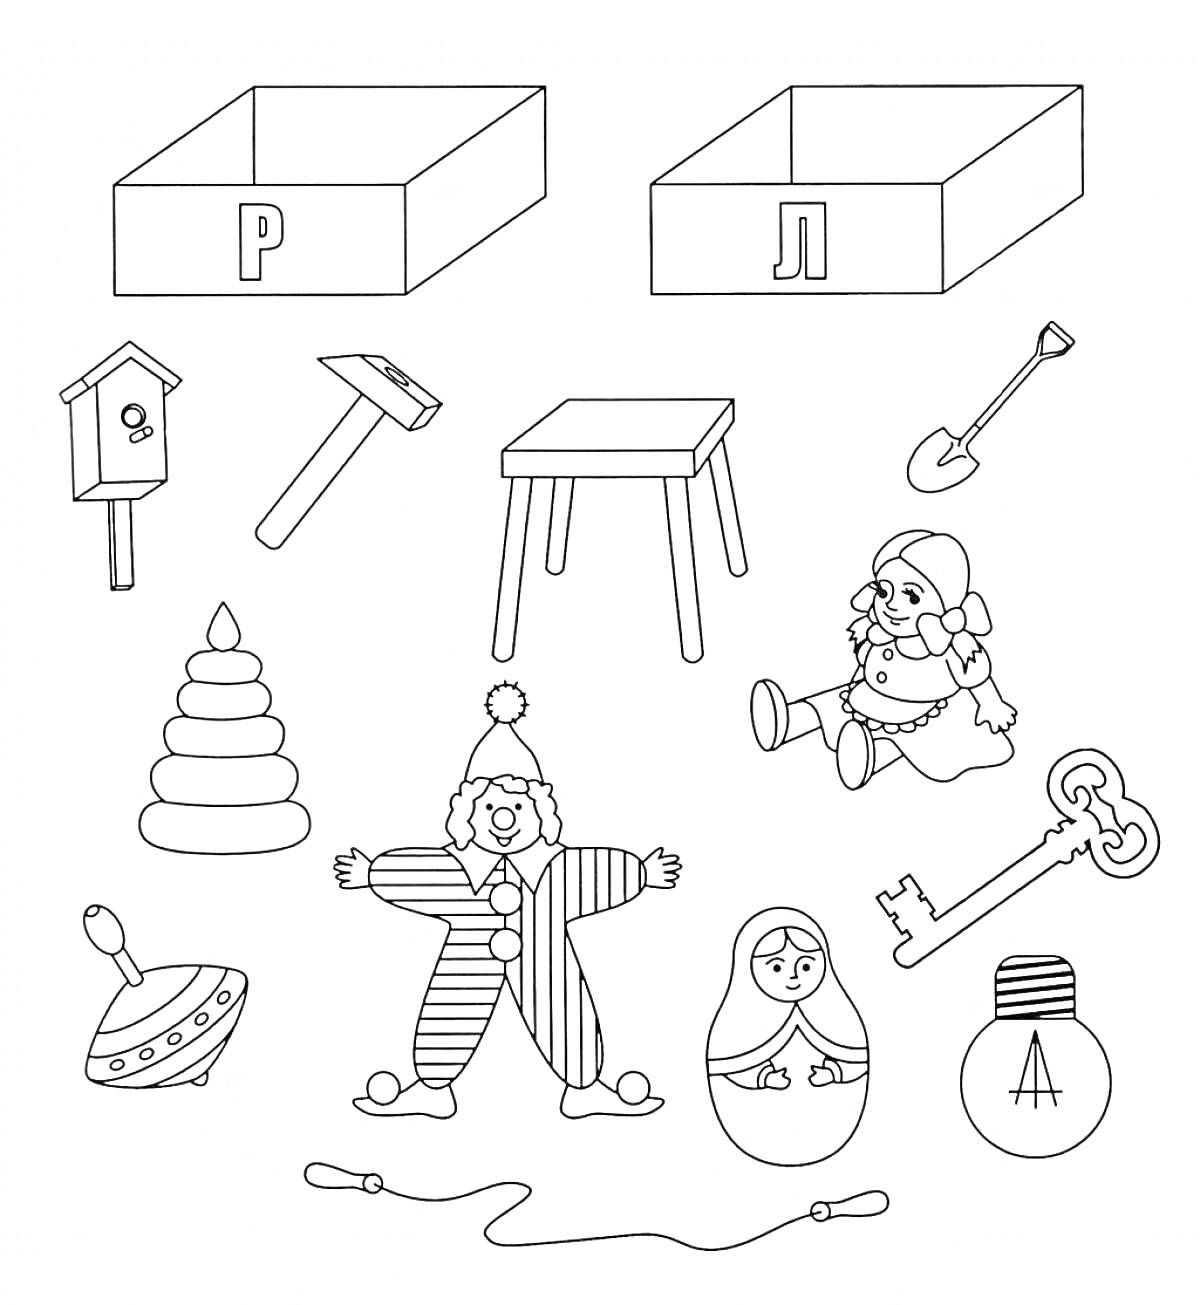 Раскраска Логопедические игры. Предметы: ящик с буквой Р, ящик с буквой Л, скворечник, молоток, табурет, лопатка, пирамида, снеговик, клоун, матрёшка, ключ, лампочка, юла, скакалка